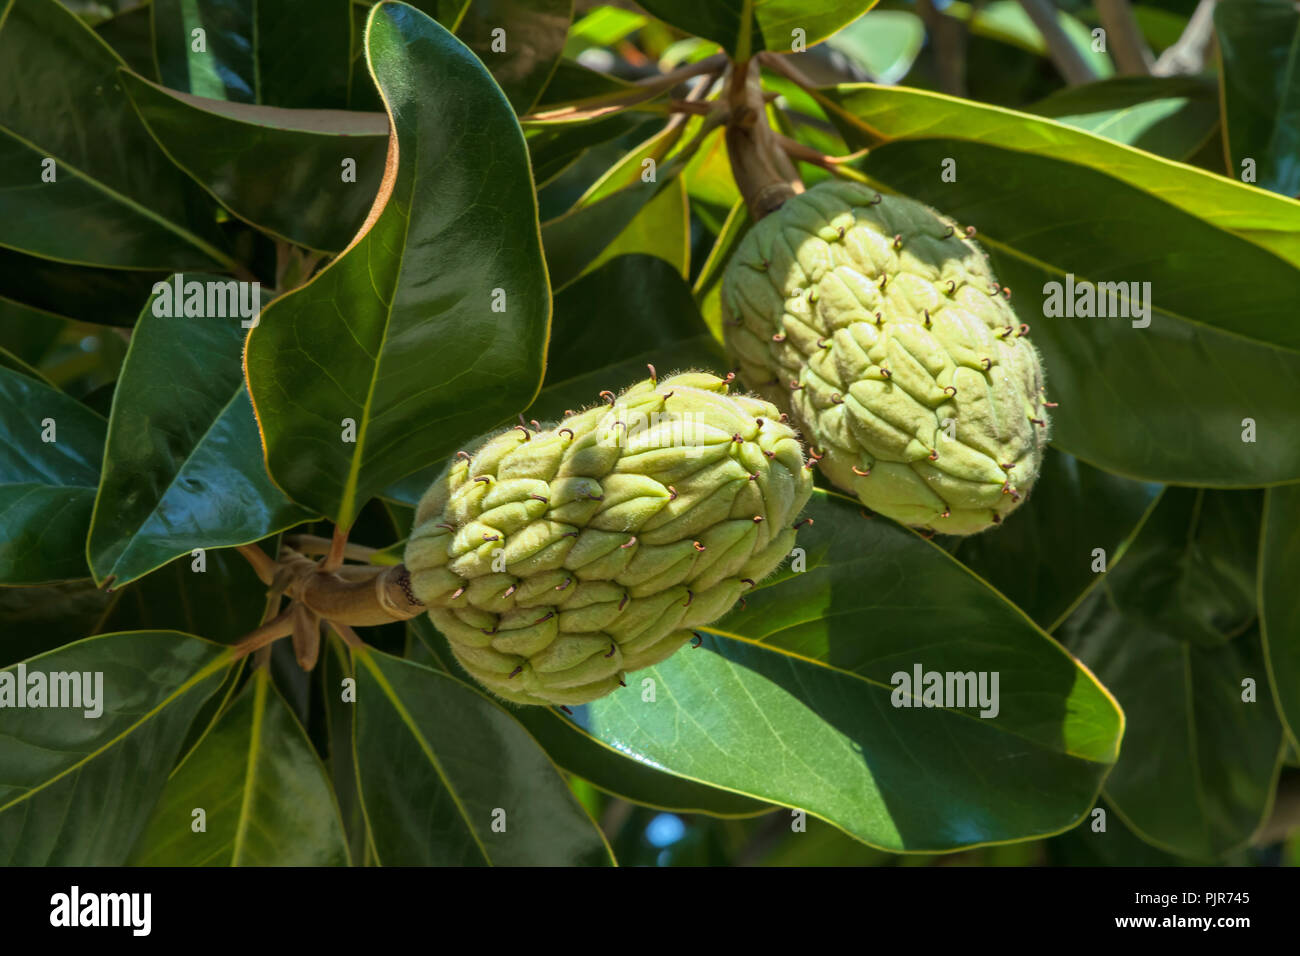 Southern magnolia fruit, San Francisco, California, United States Stock Photo